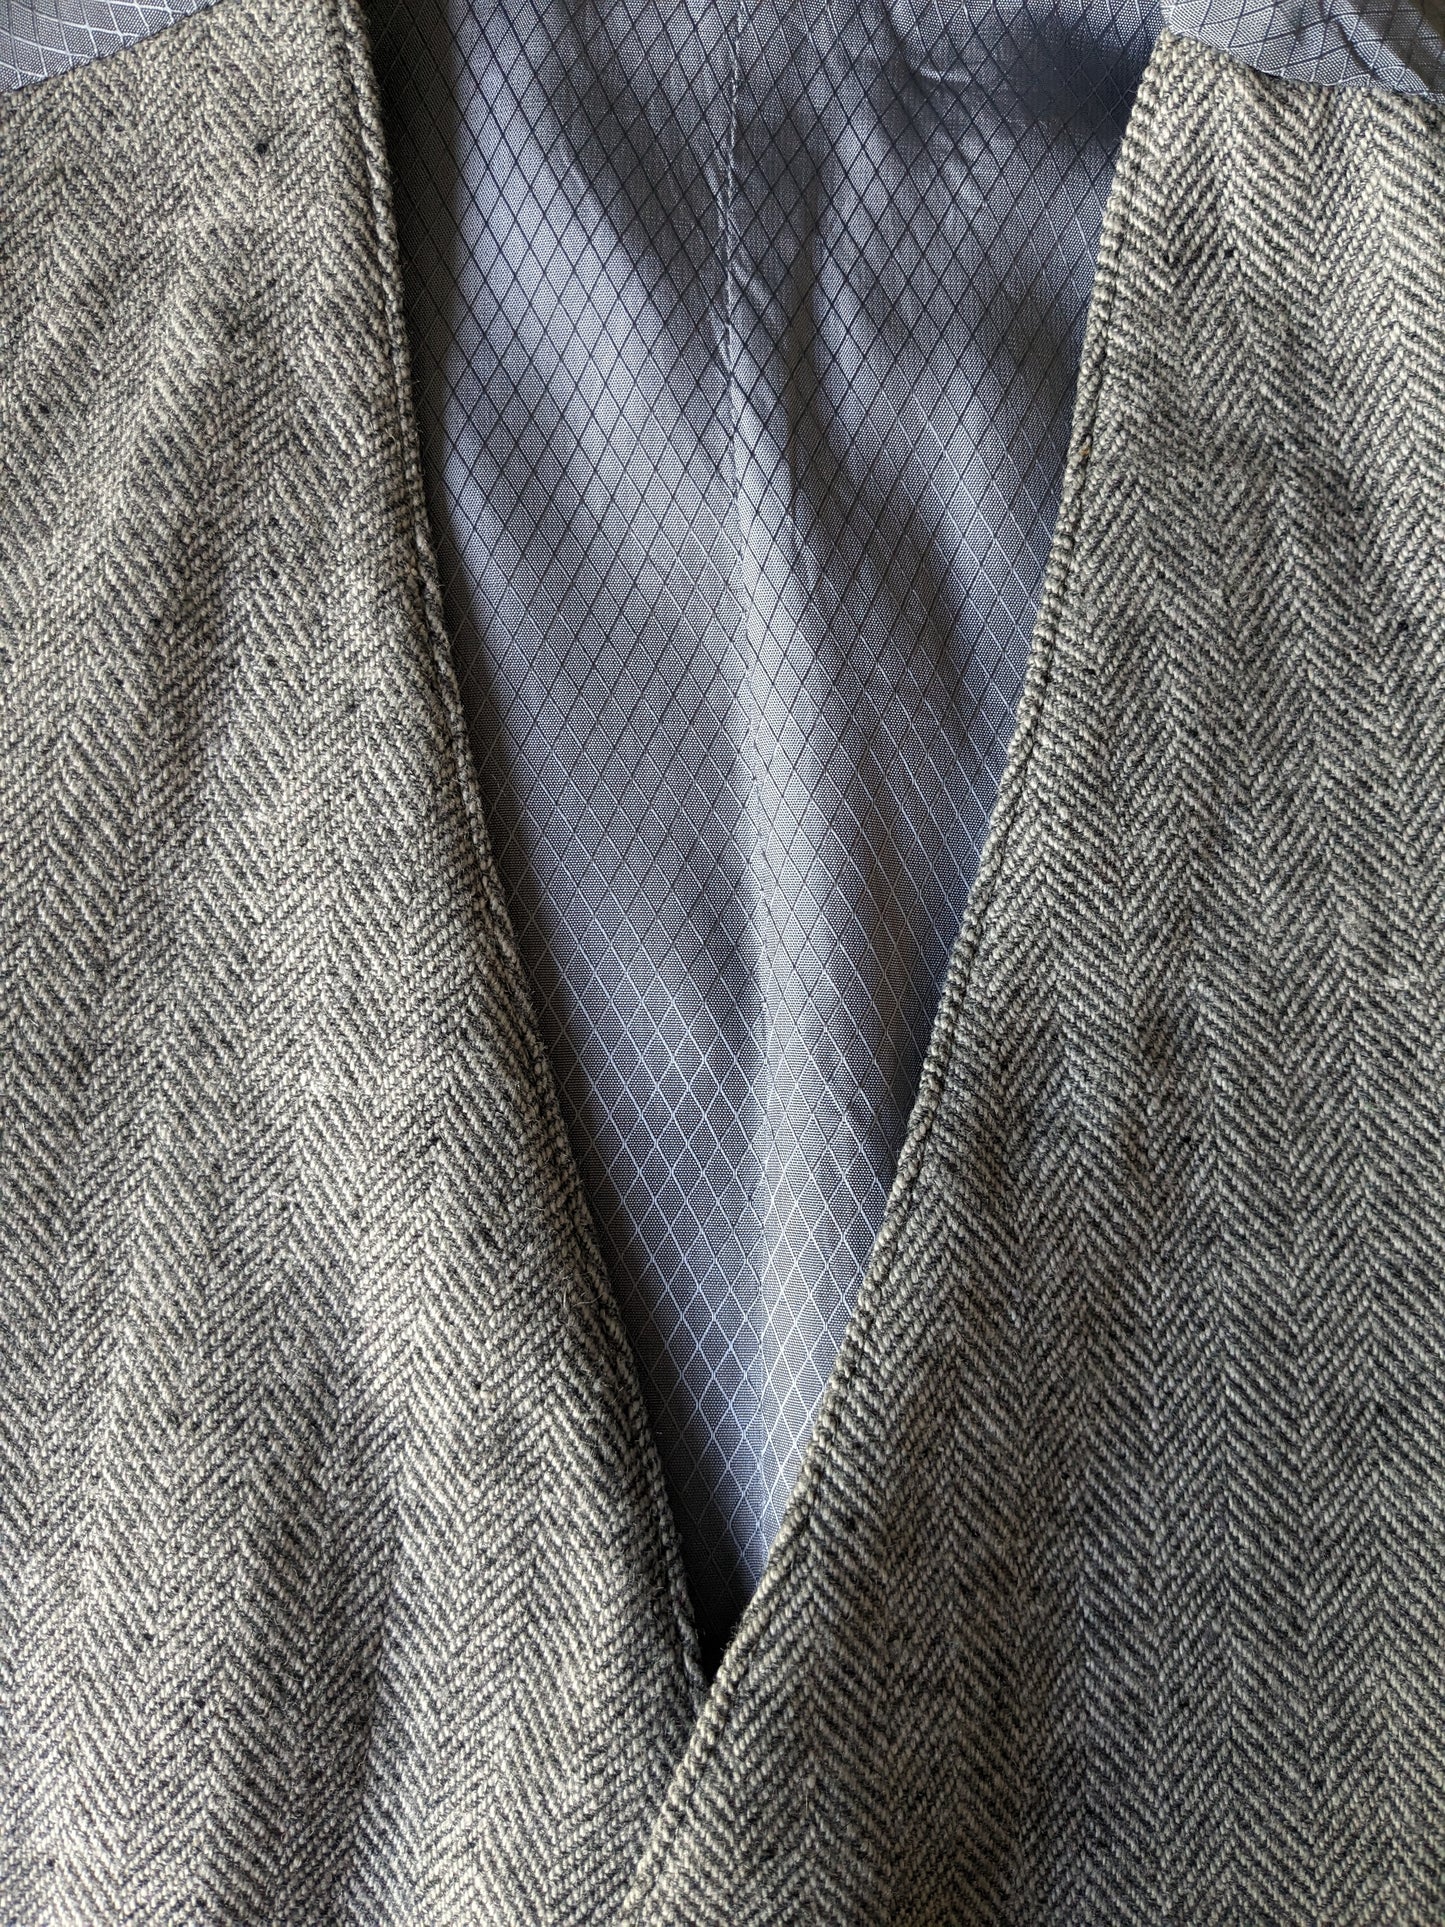 Woolen waistcoat. Gray herringbone motif. Size S. #316